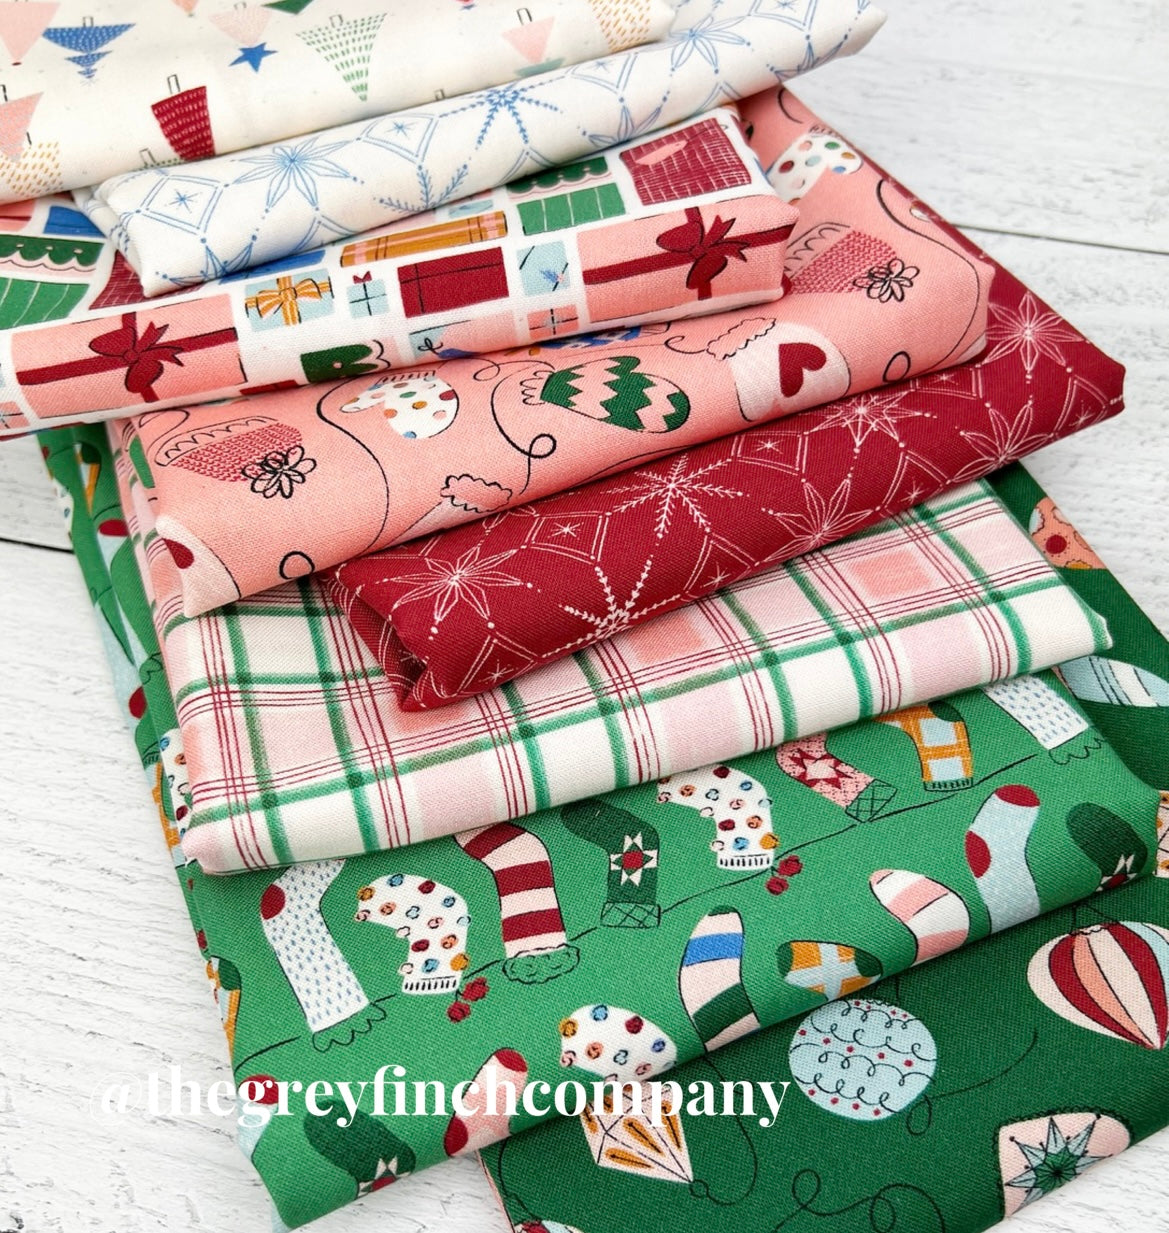 Warm & Cozy Collection Bundle - 8 fabrics by MK Studio - Cloud9 Fabrics